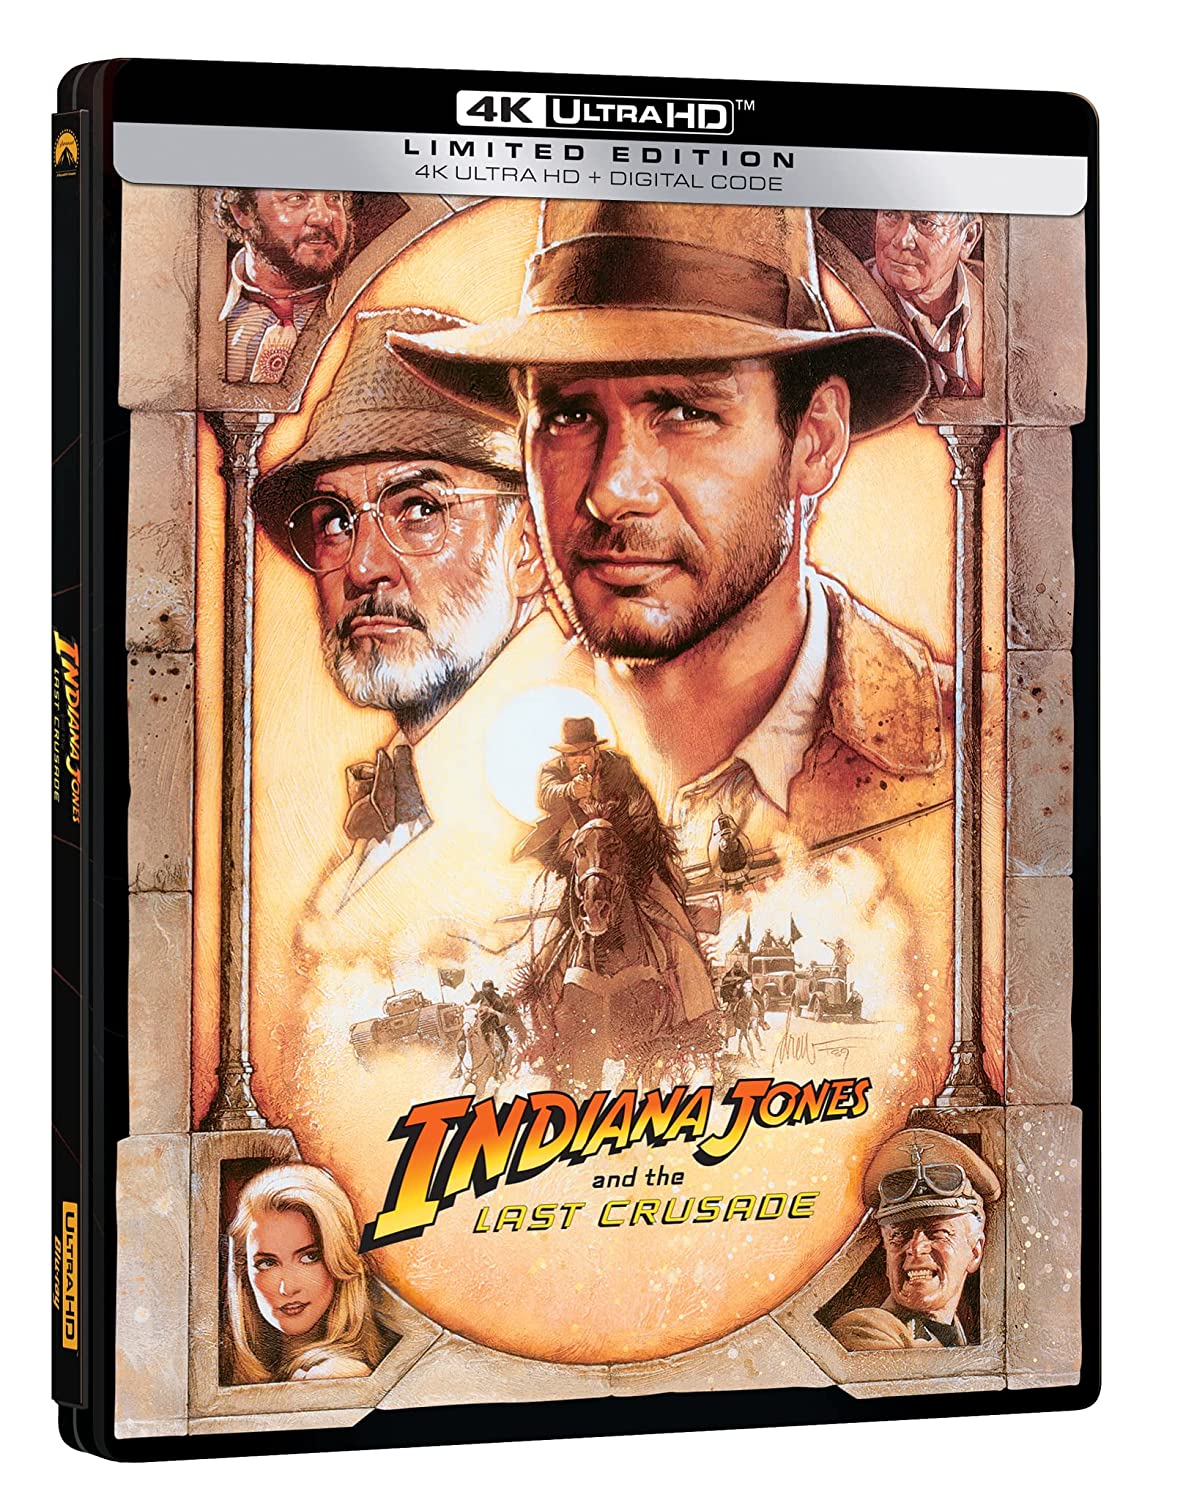 Indiana Jones and the Last Crusade 4K UHD  Steelbook - $14.99 on Amazon